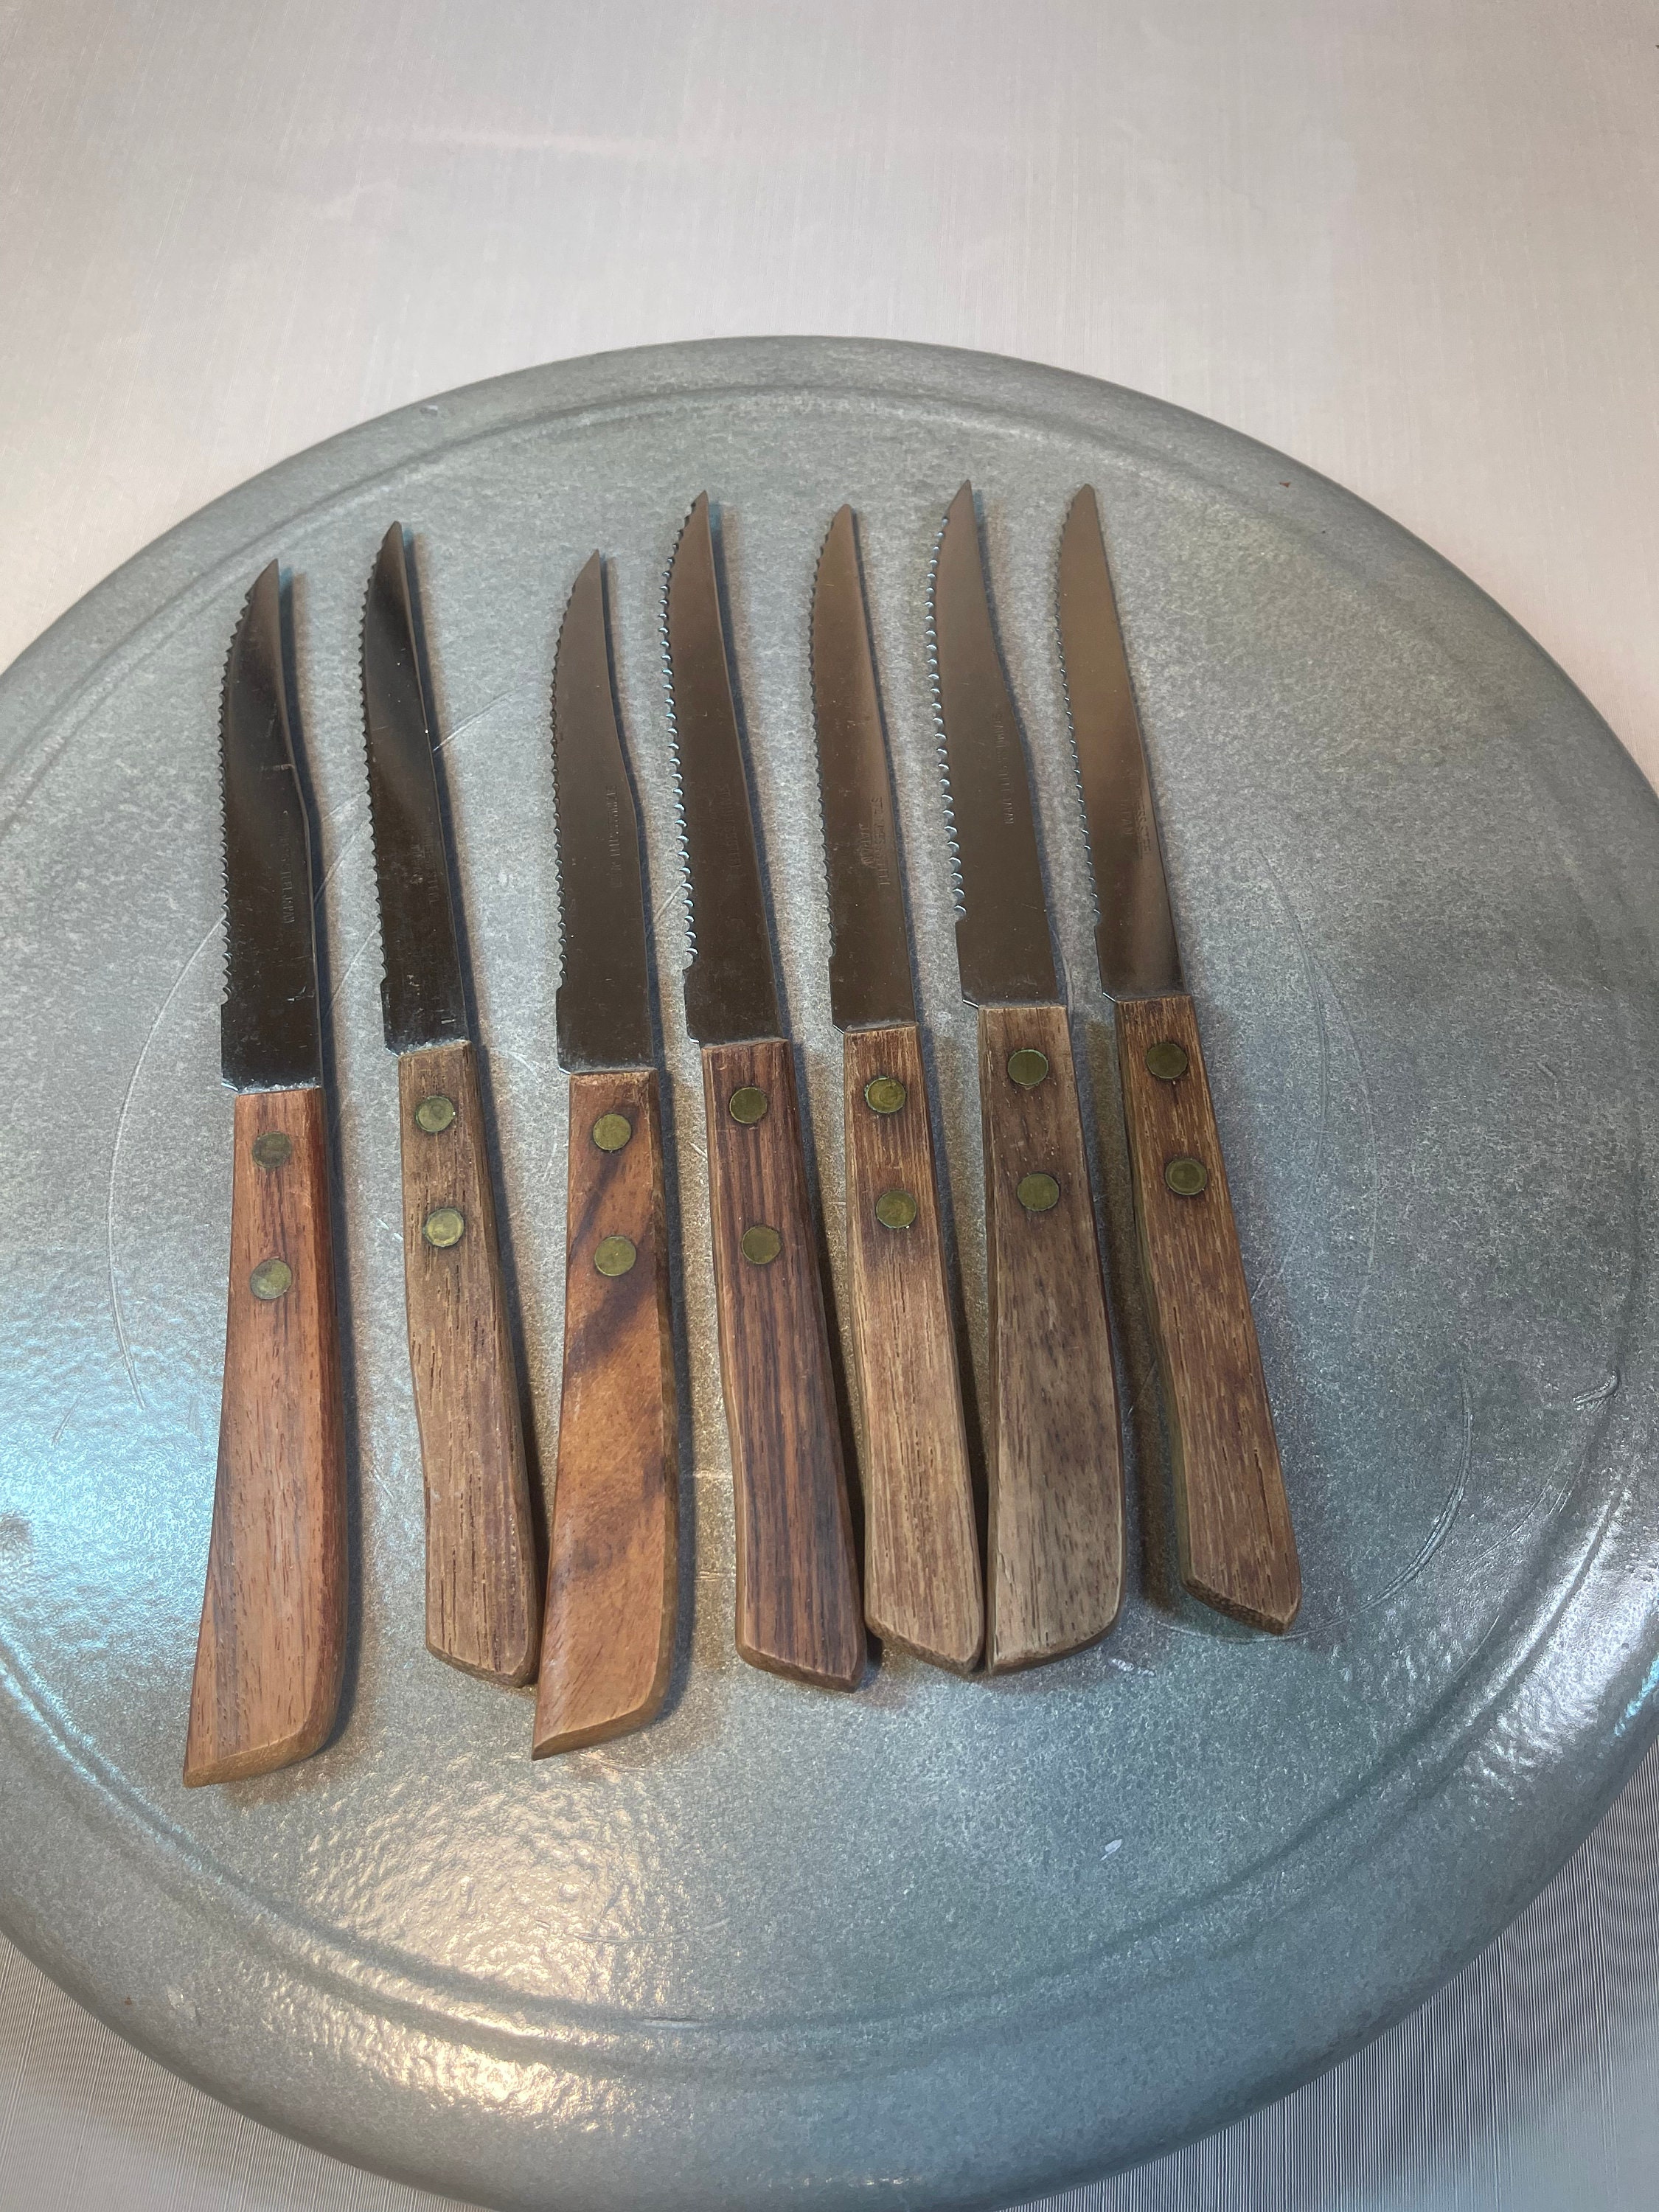 Vintage Steak Knives Stainless Steel With Wood Handles 7.75 